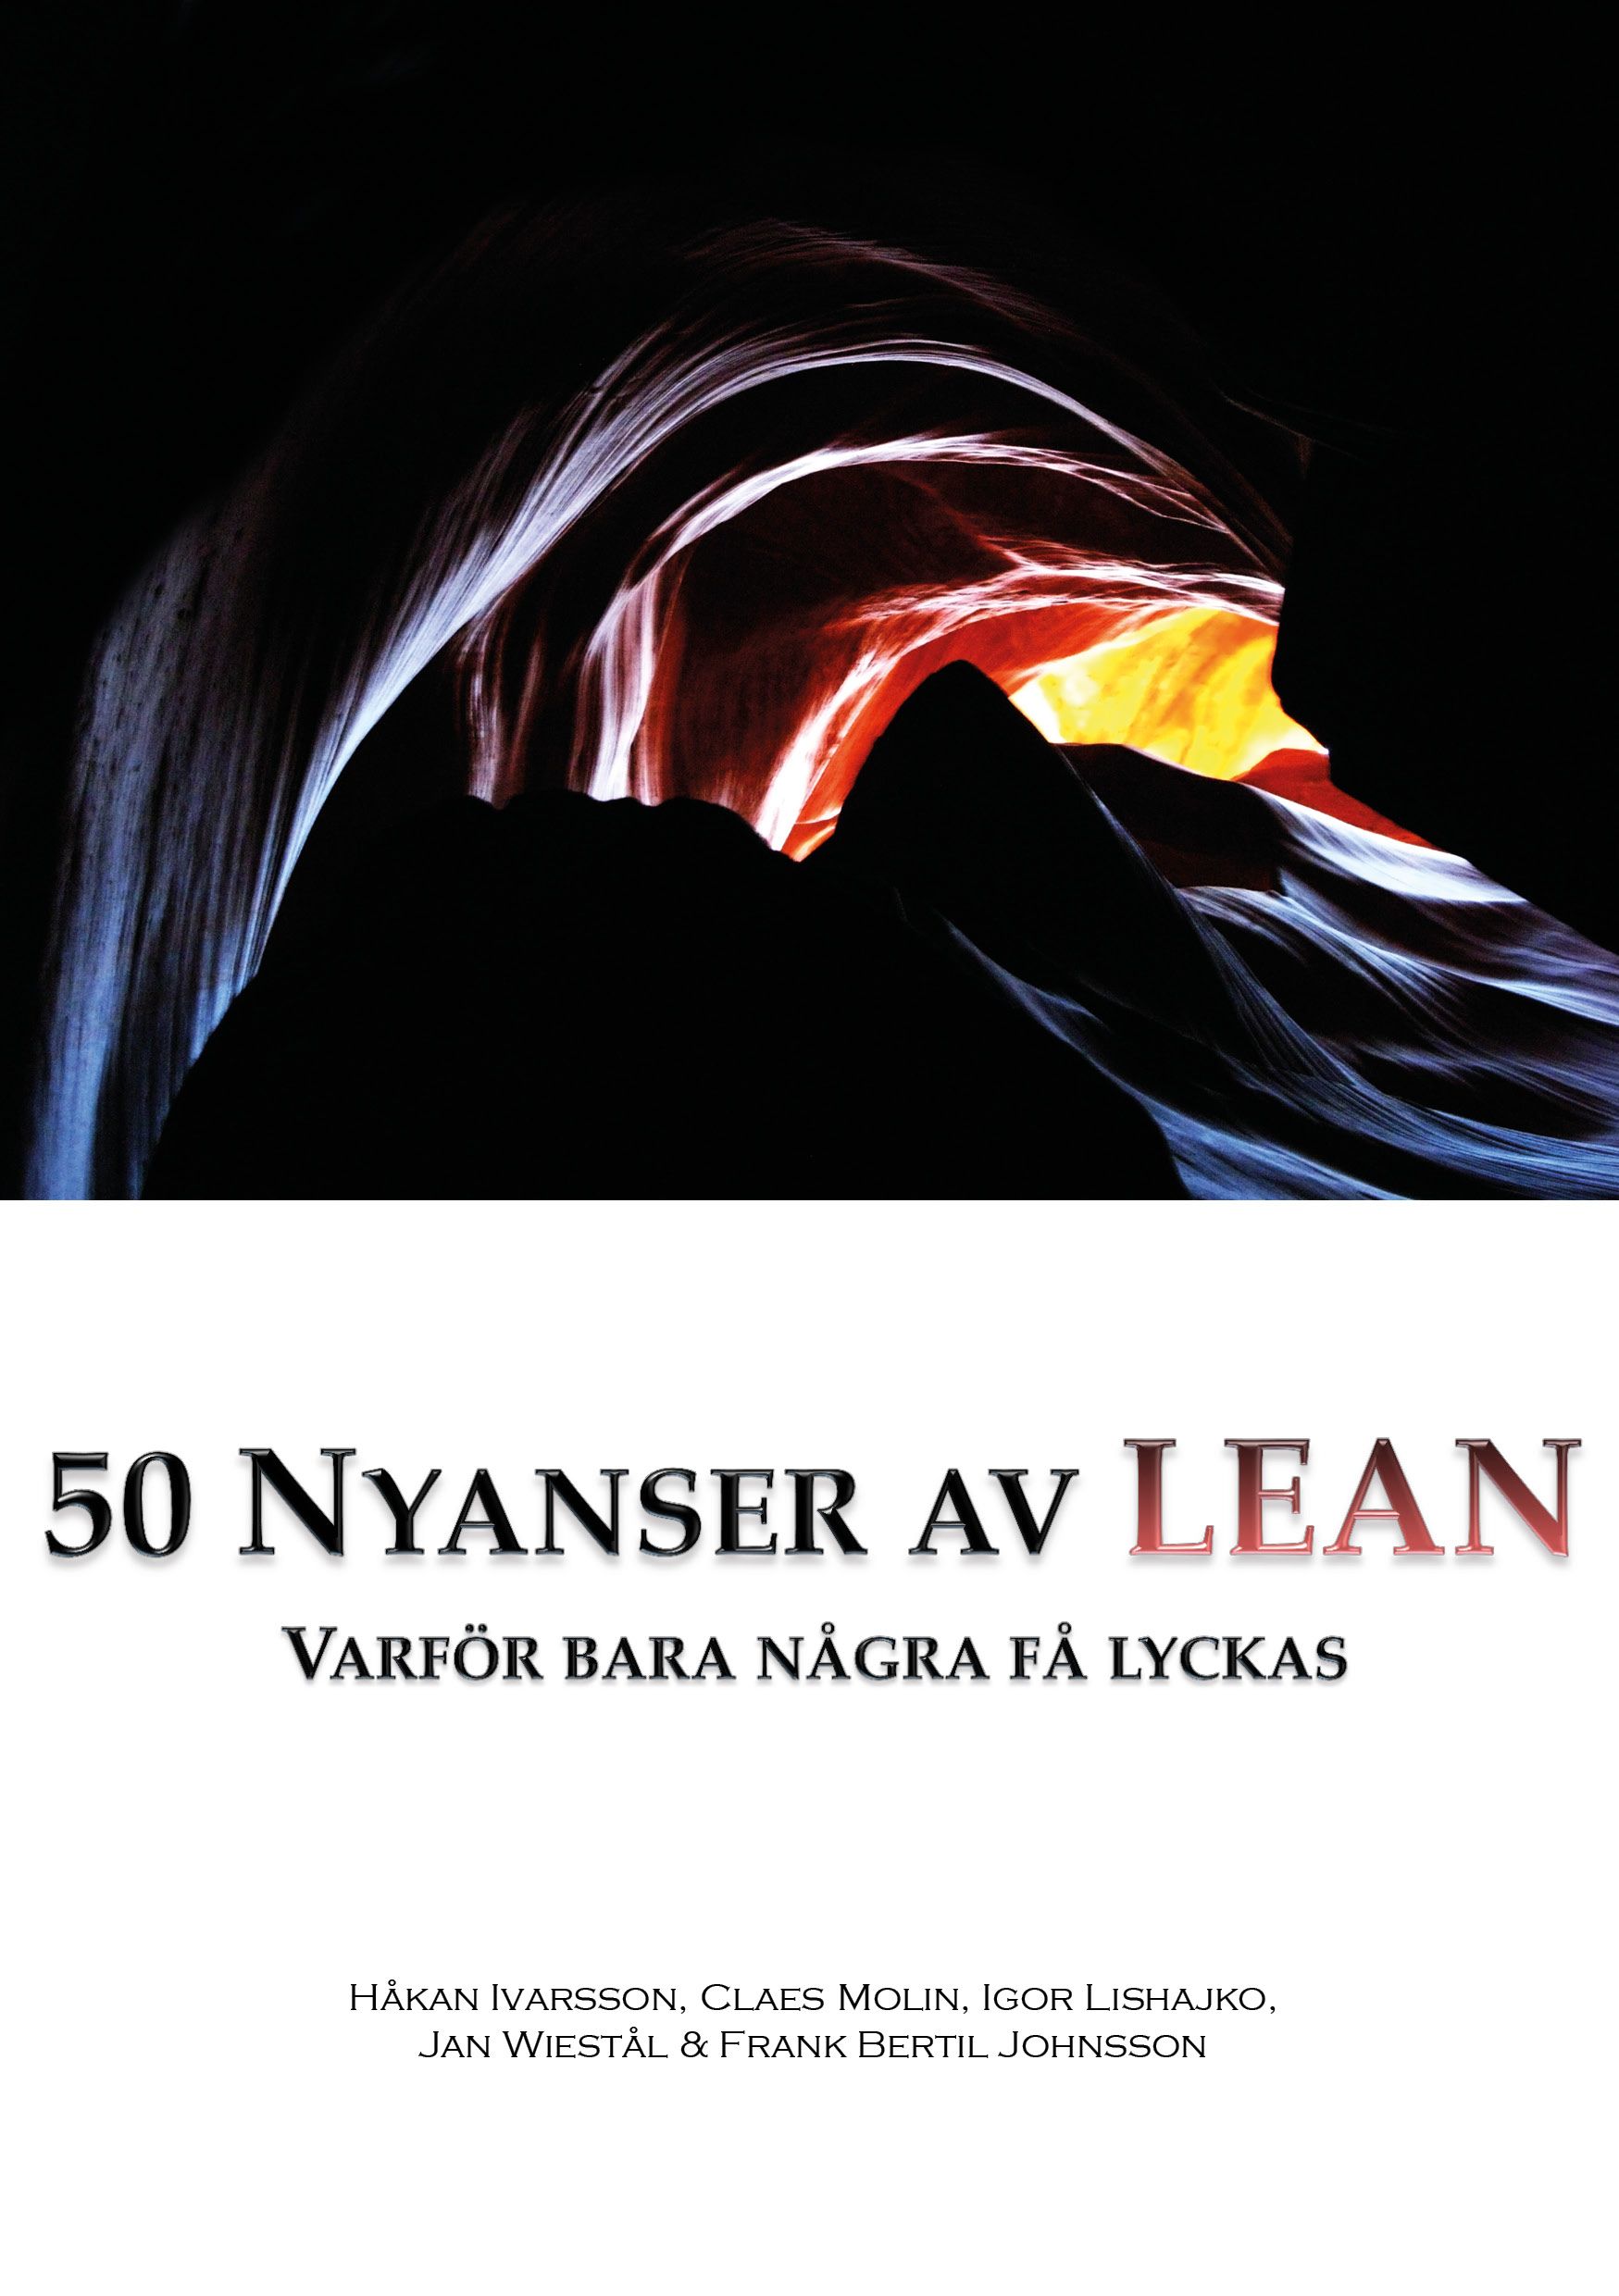 50 nyanser av LEAN, eBook by Håkan Ivarsson, Frank Bertil Johnsson, Igor Lishajko, Claes Molin, Jan Wiestål